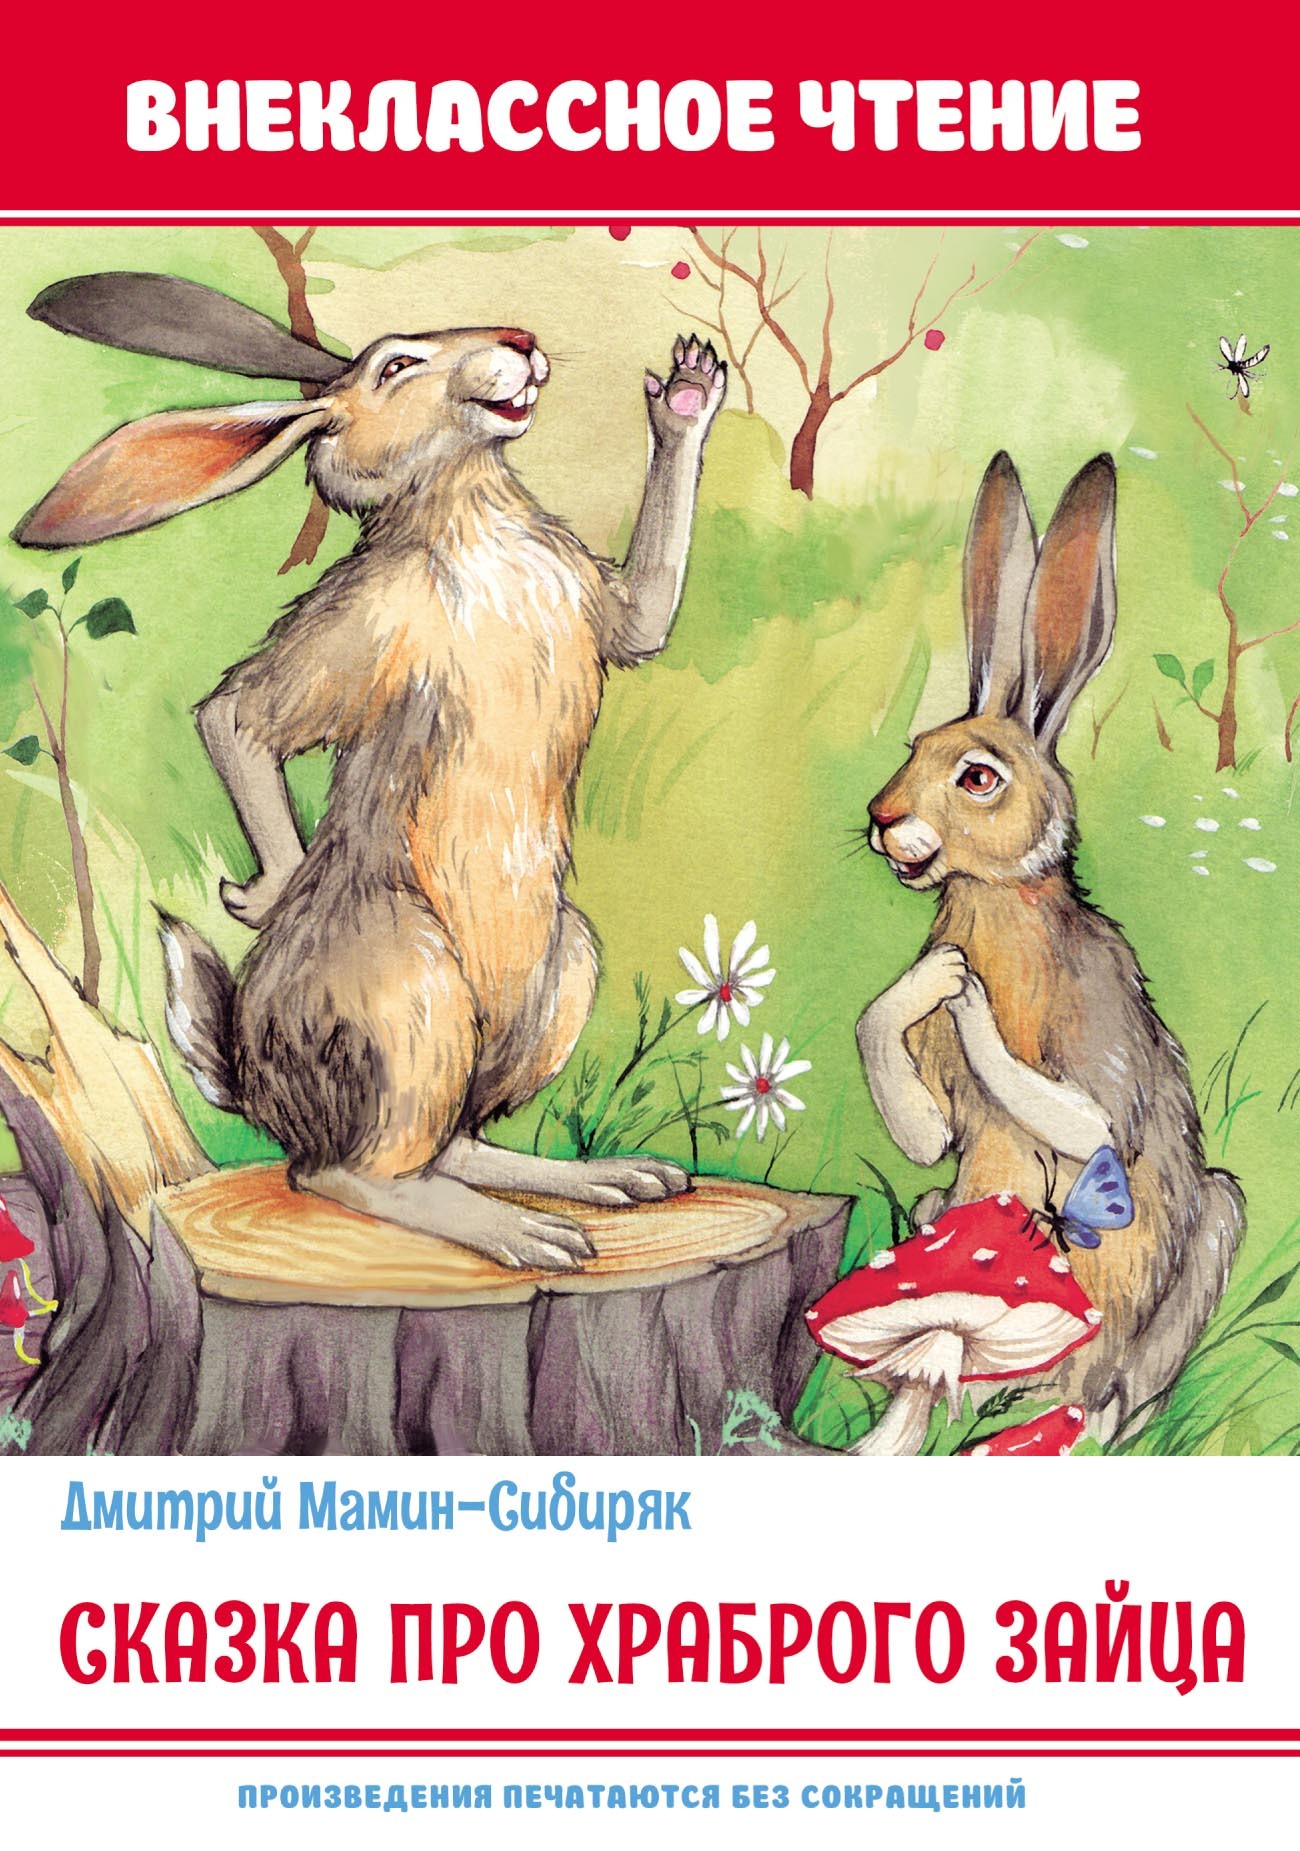 Сказка про храброго зайца, Дмитрий Мамин-Сибиряк – скачать pdf на ЛитРес